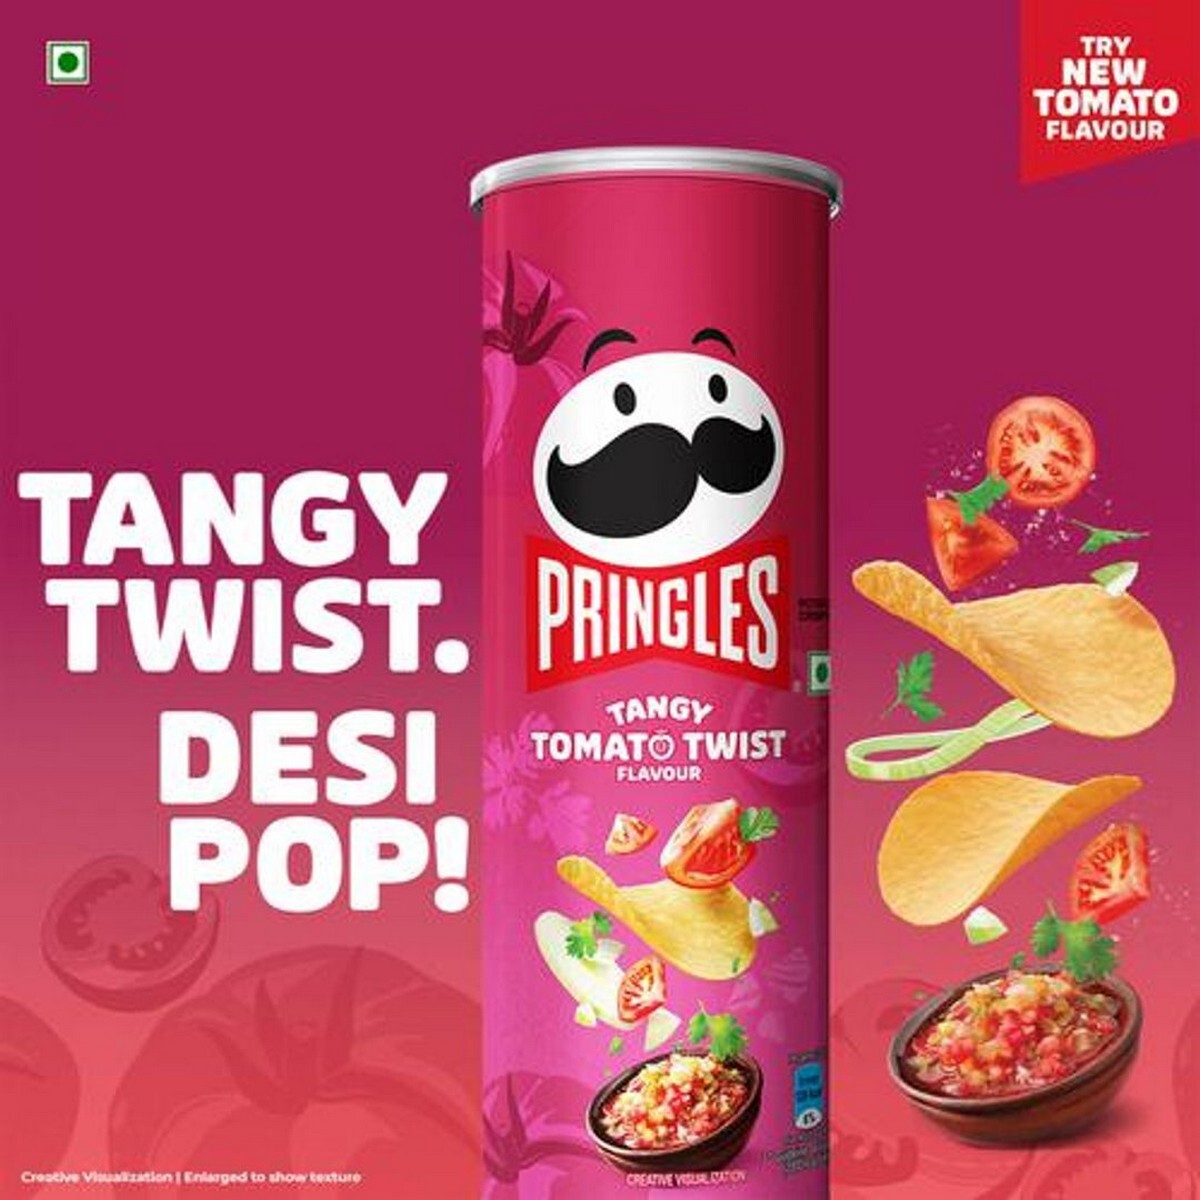 Pringles Tangy Tomato Twist 102G